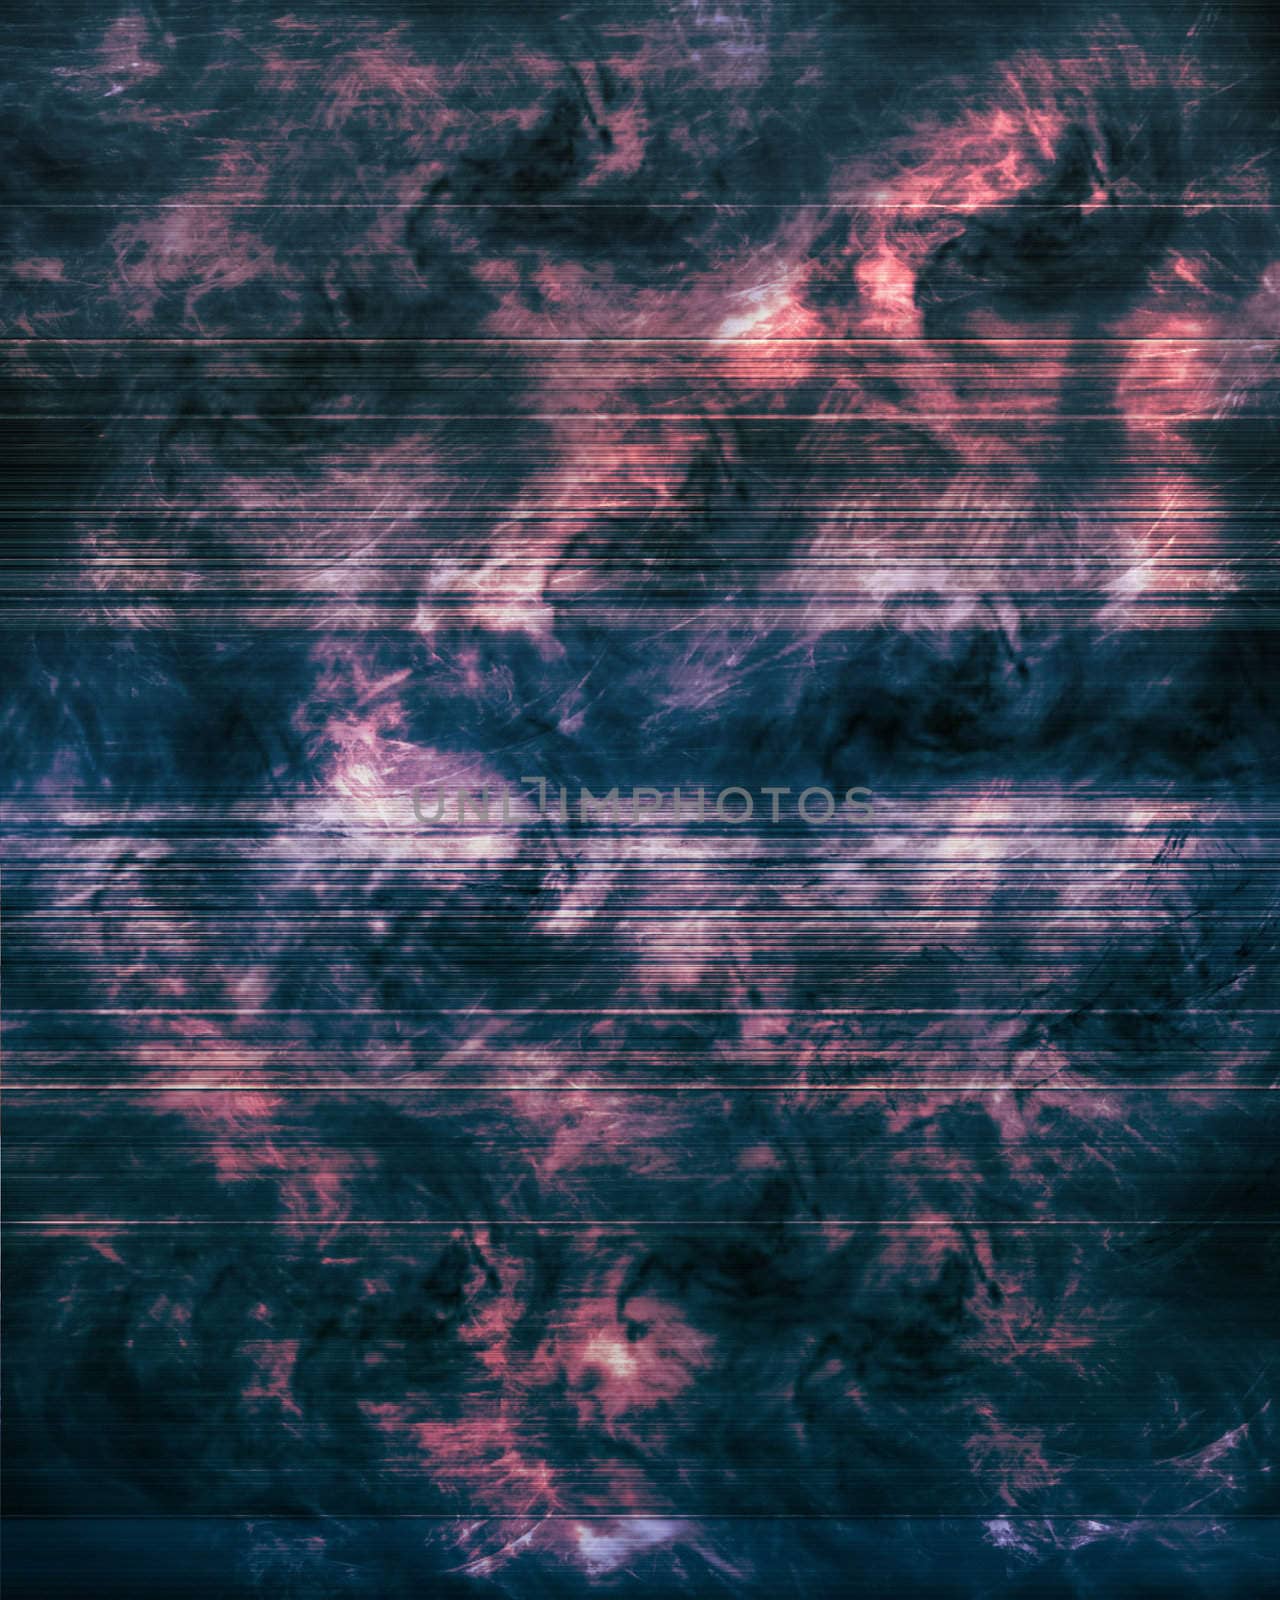 High Tech Grunge Metalilc Background by kathygold